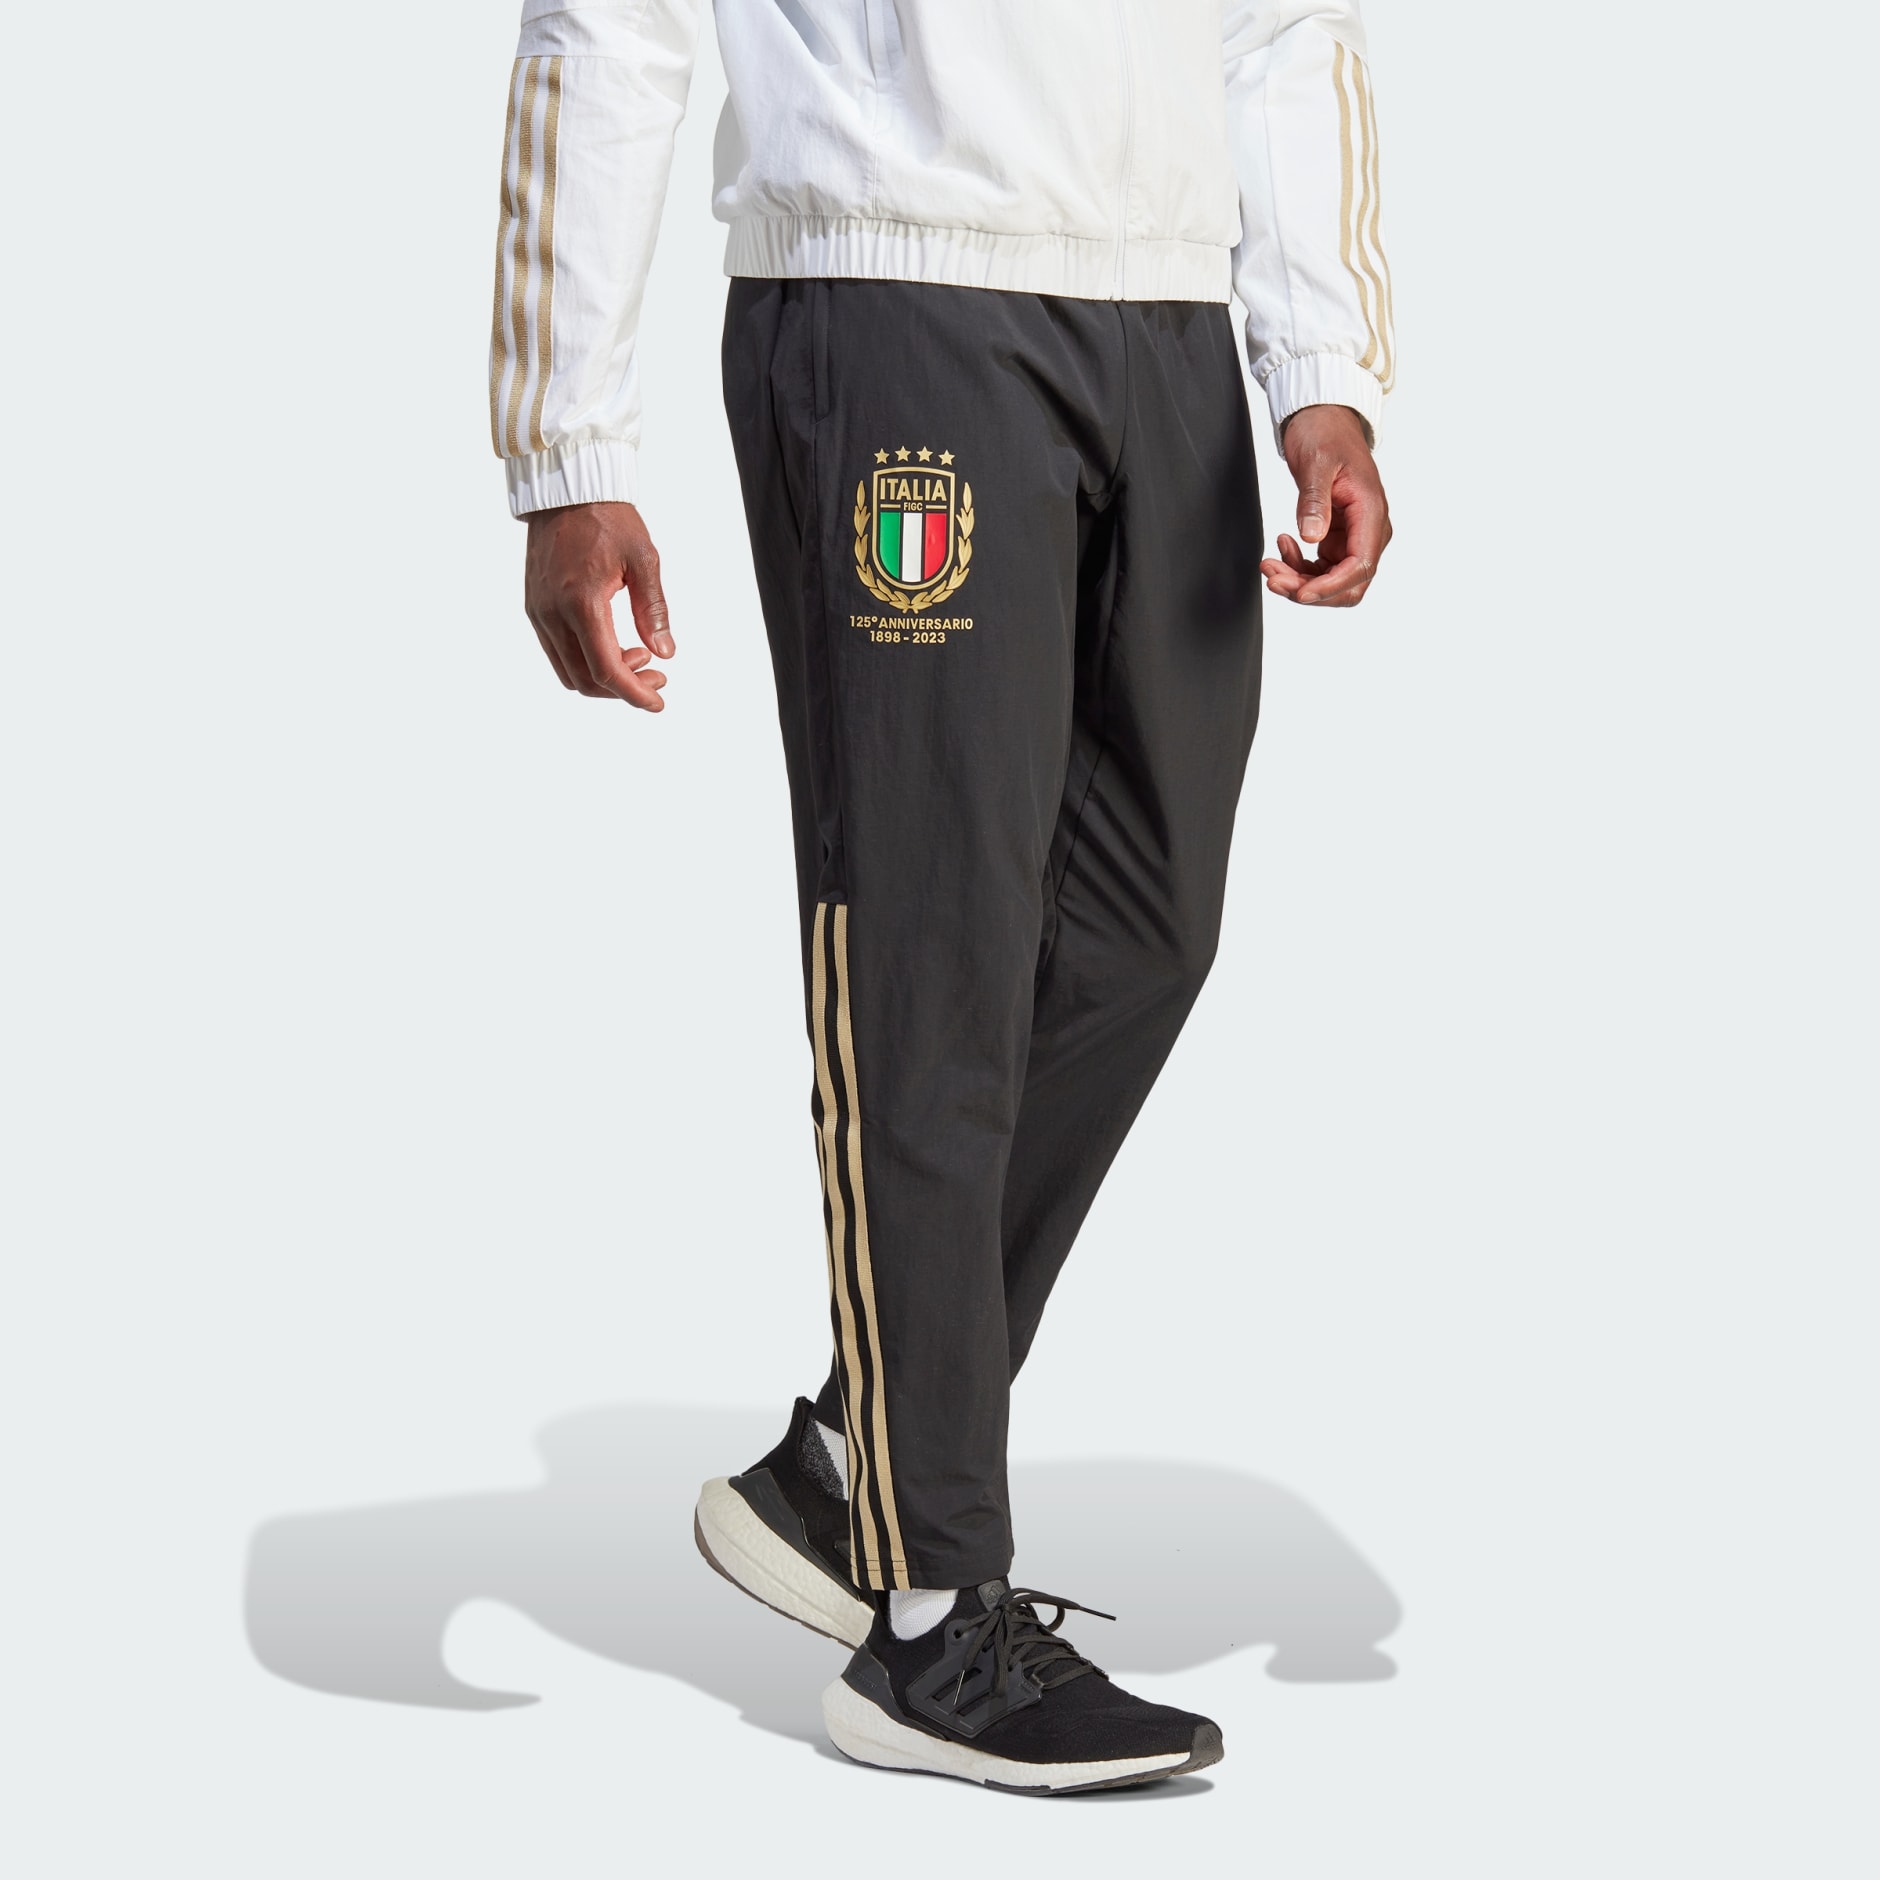 Men's Clothing - Italy 125th Anniversary Pants - Black